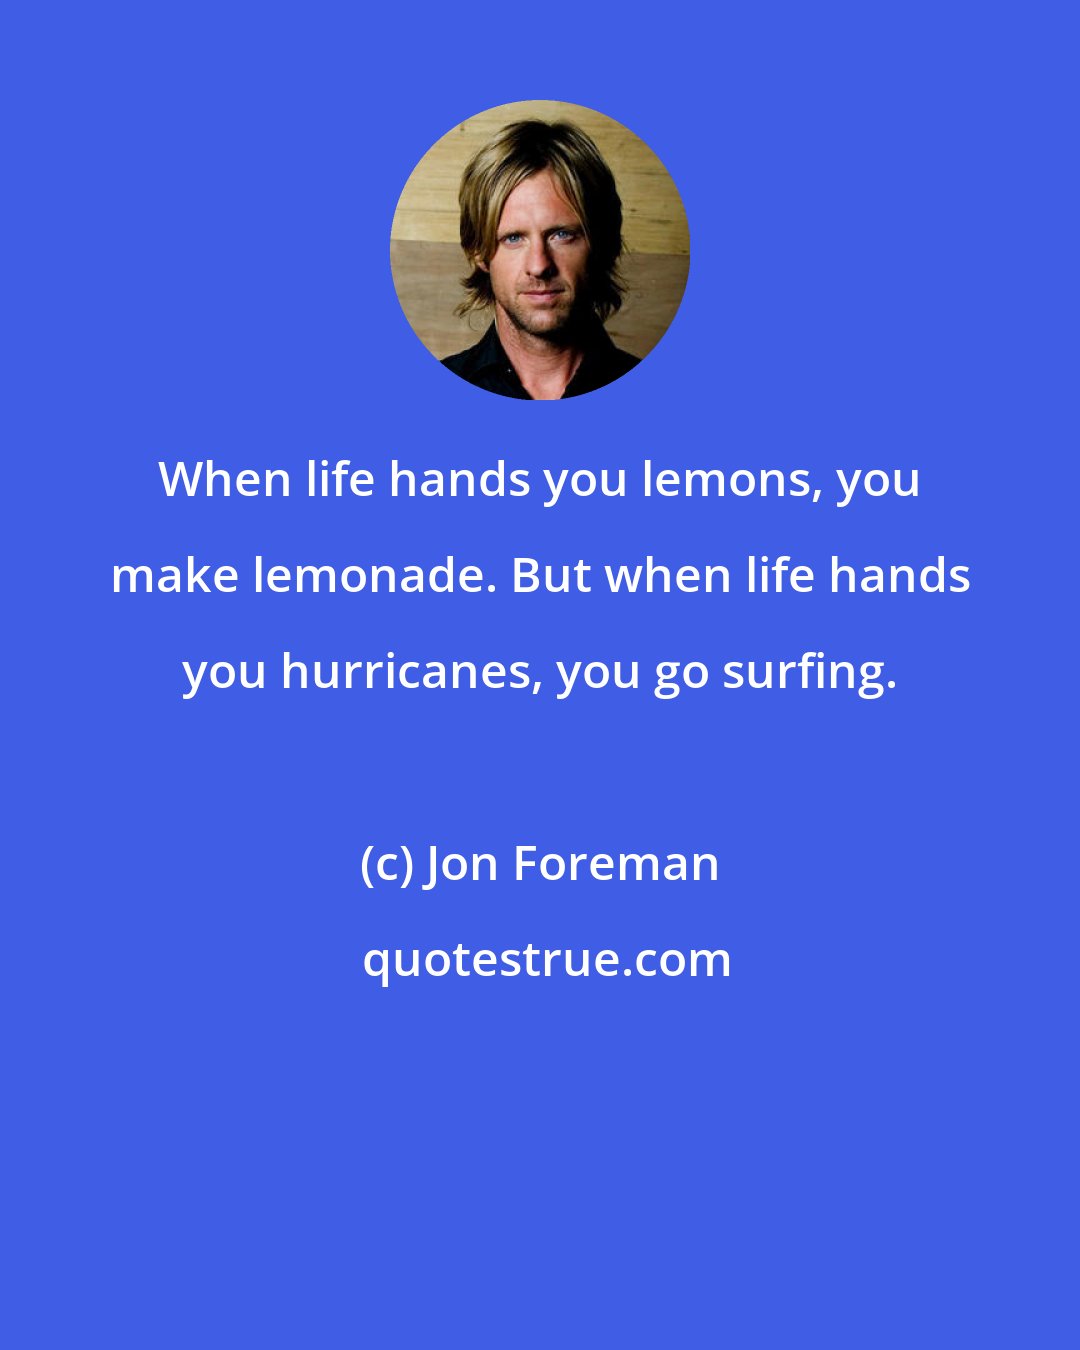 Jon Foreman: When life hands you lemons, you make lemonade. But when life hands you hurricanes, you go surfing.